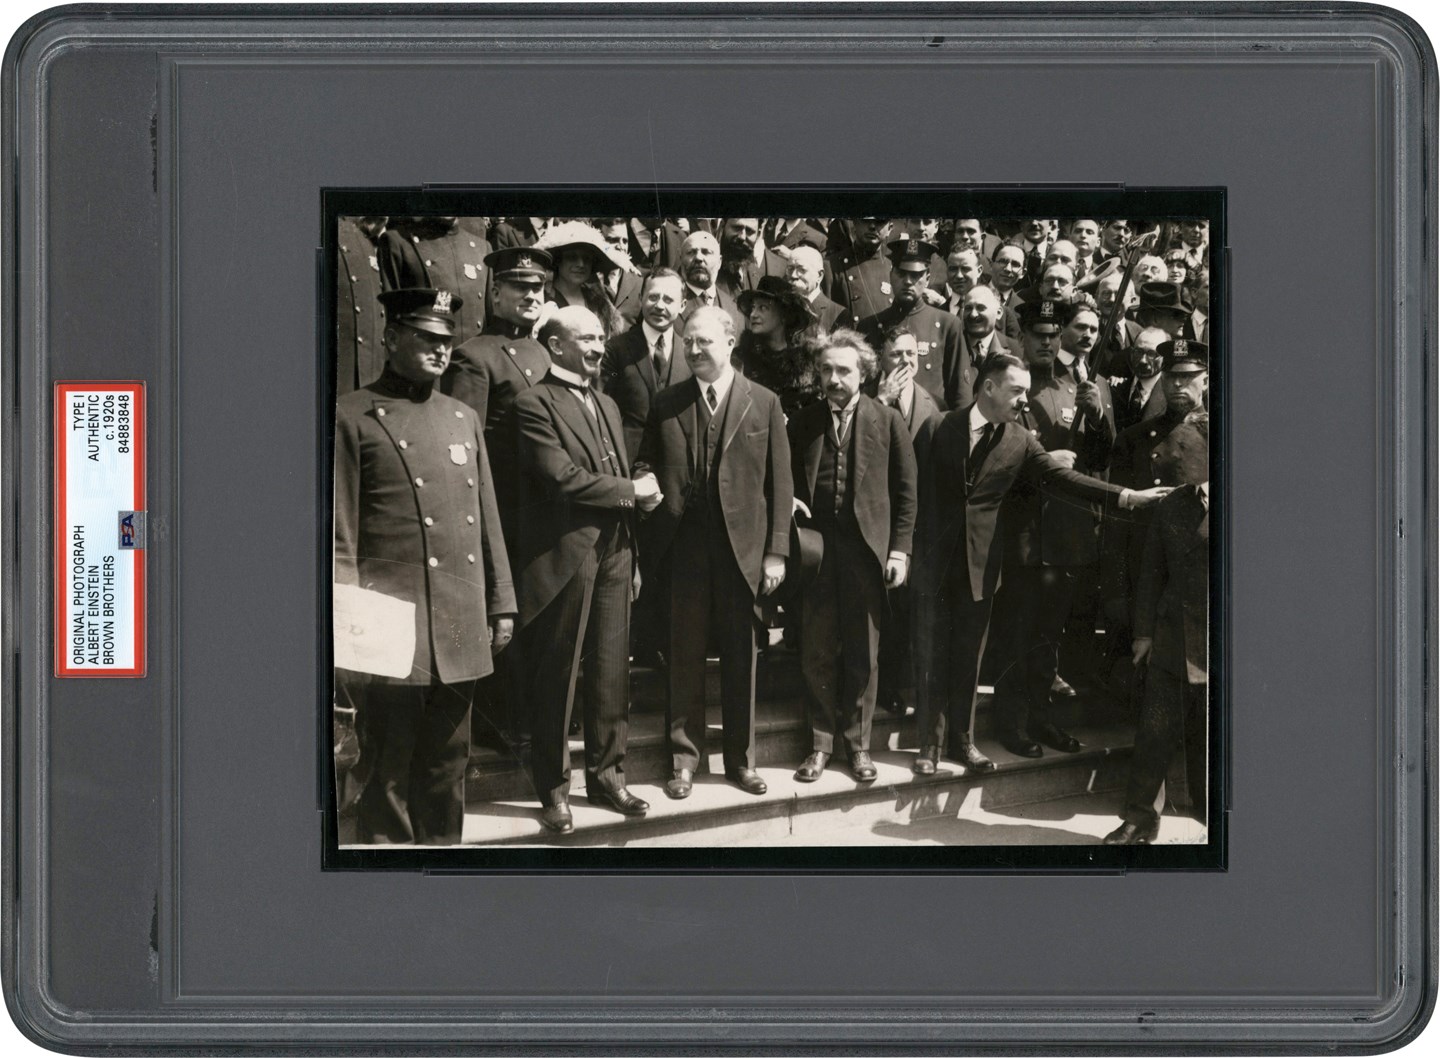 - 1921 Albert Einstein Photograph - First Visit to the United States (PSA Type I)